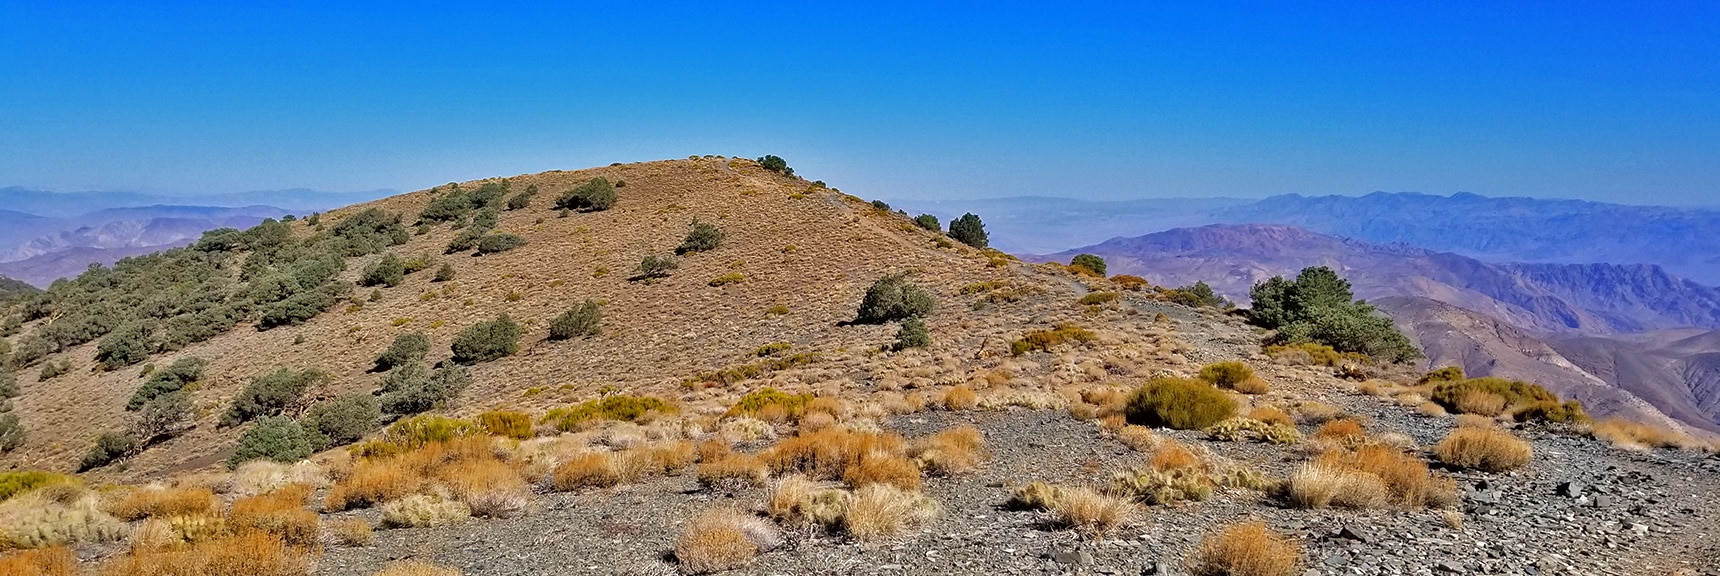 Wildrose Peak Saddle Summit, View to True Mid-Summit from South Summit | Wildrose Peak | Panamint Mountain Range | Death Valley National Park, California